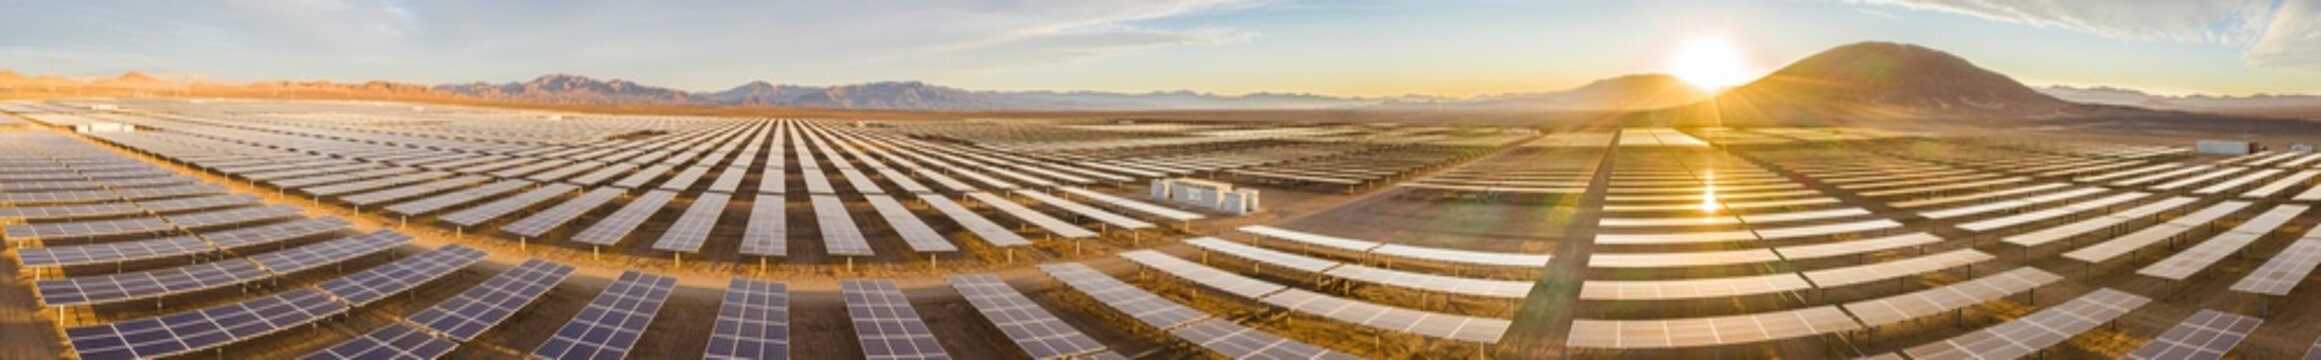 Solar Energy Photovoltaic Power Plant over Atacama desert sands, Chile. Sustainability and green energy from the sun with Solar Energy in the driest desert in the world: Atacama